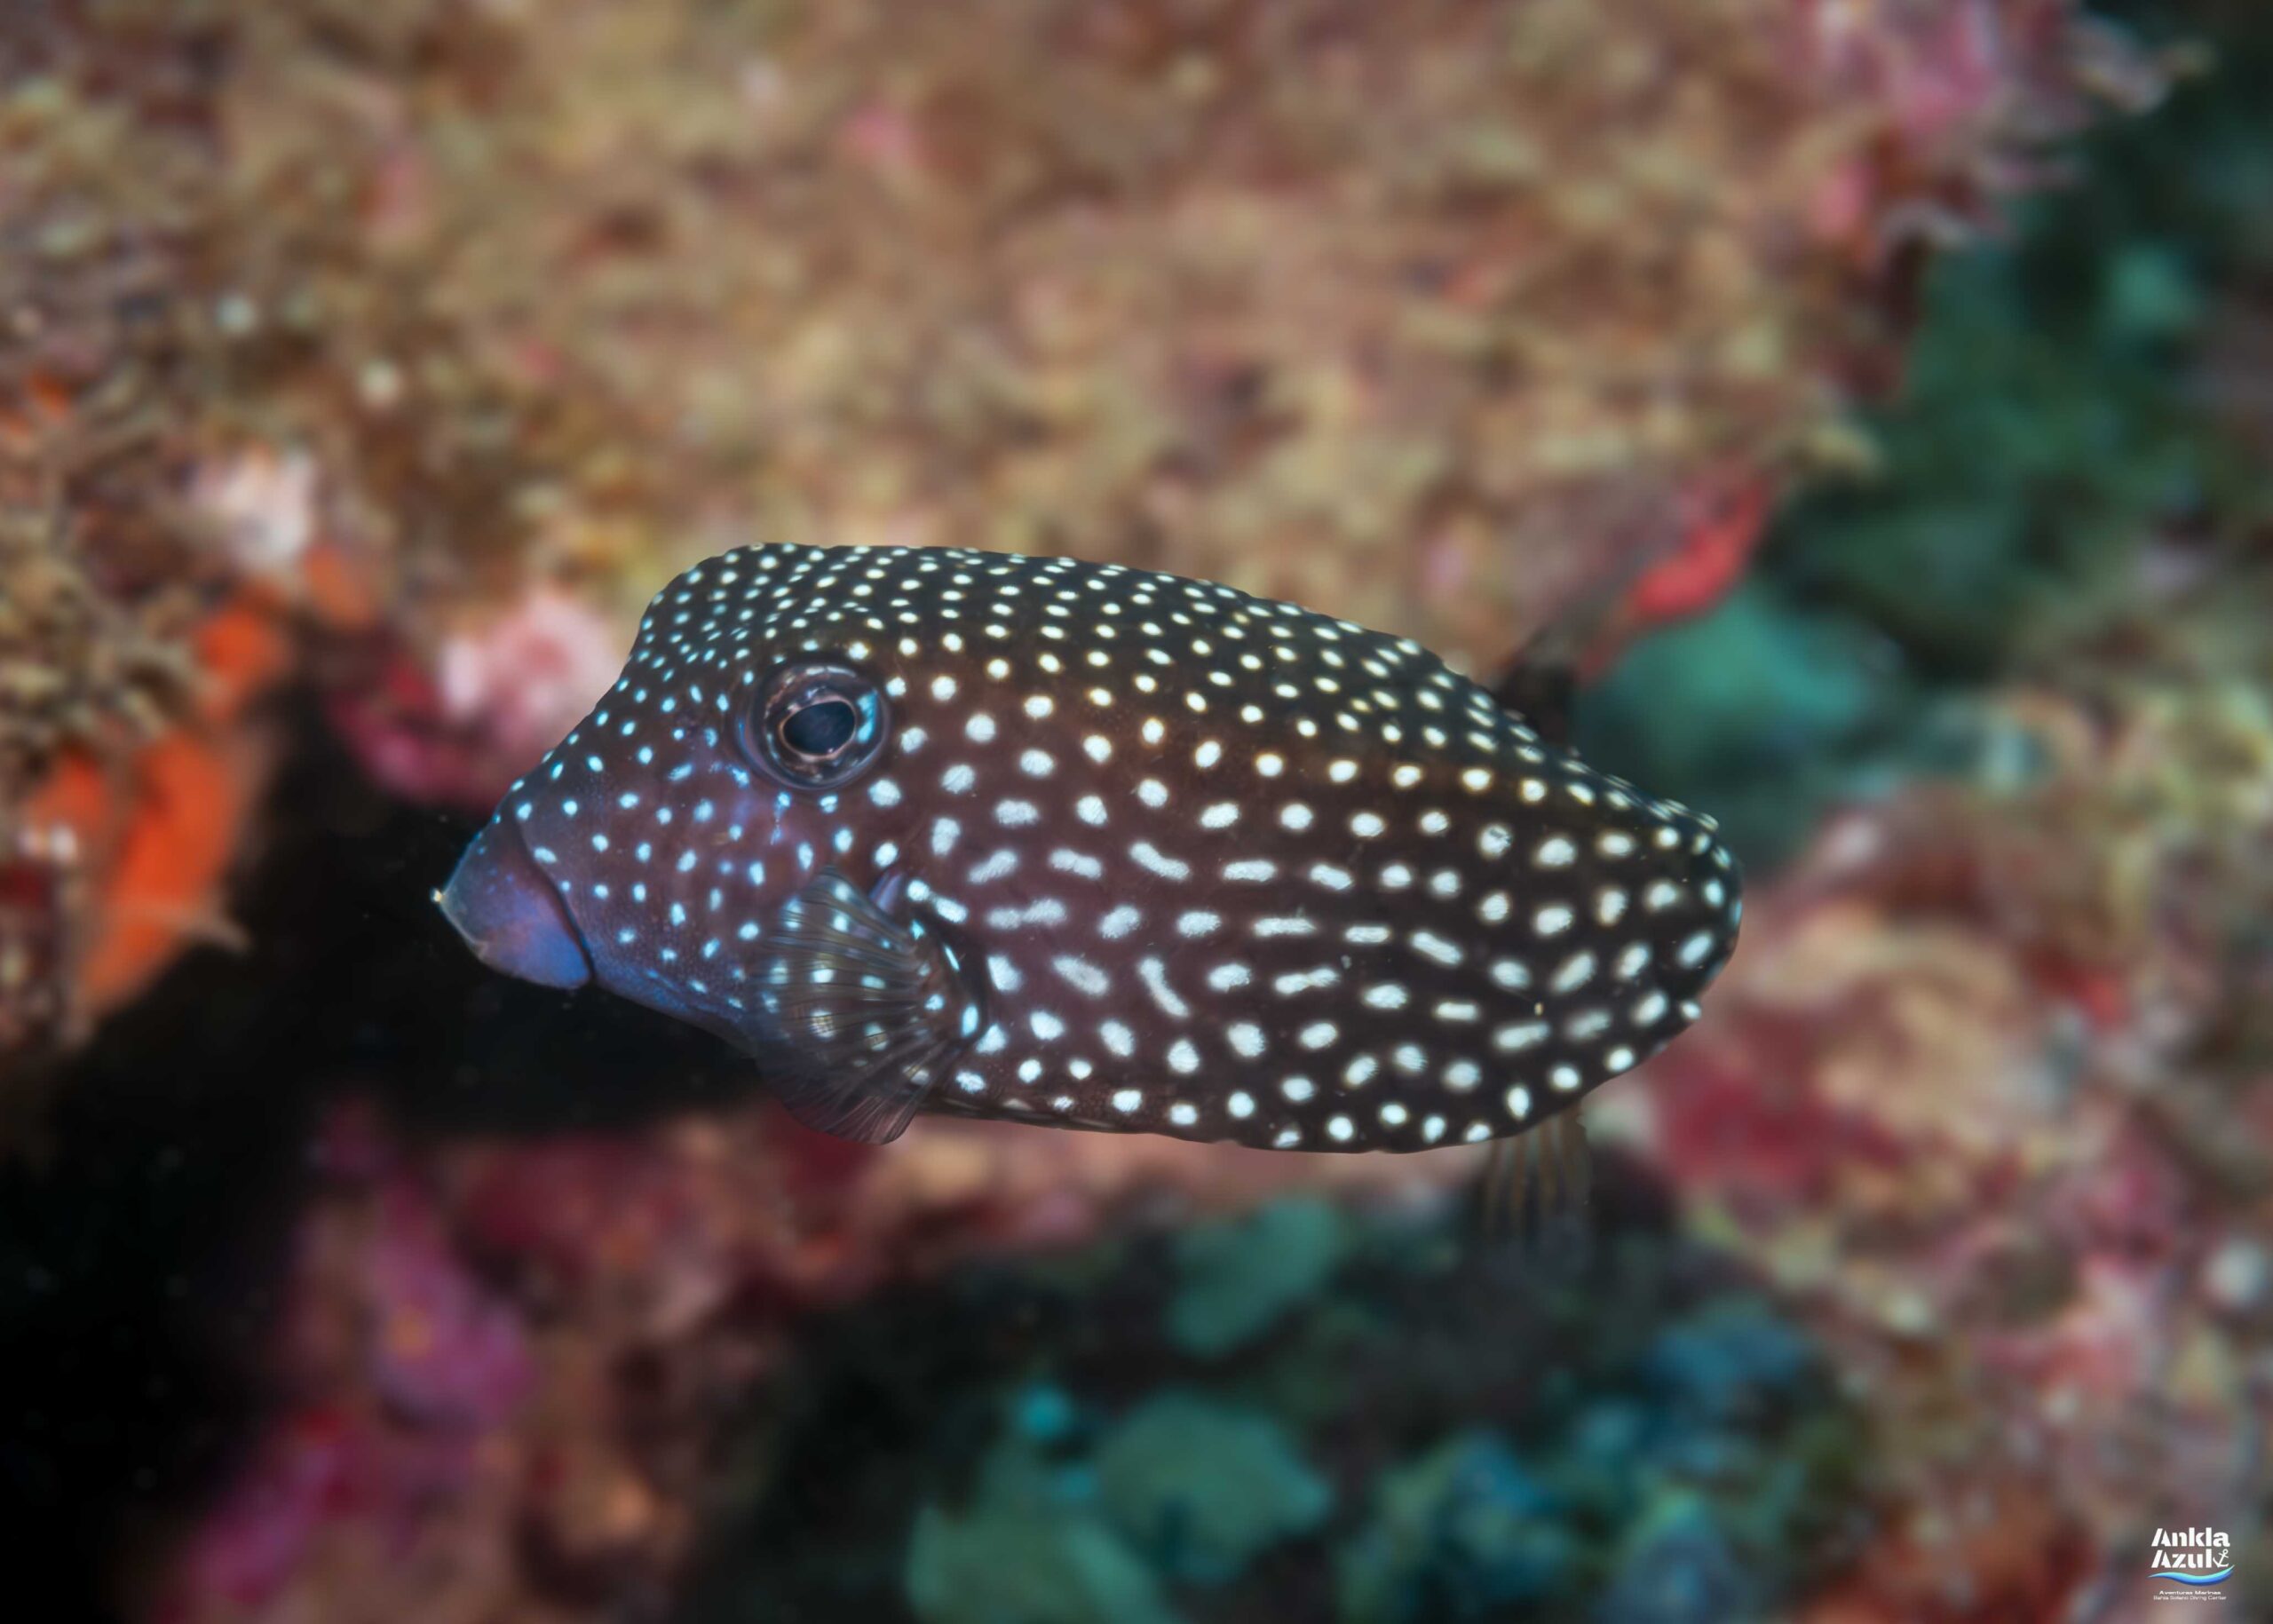 photo 4 Spotted boxfish | Ankla Azul